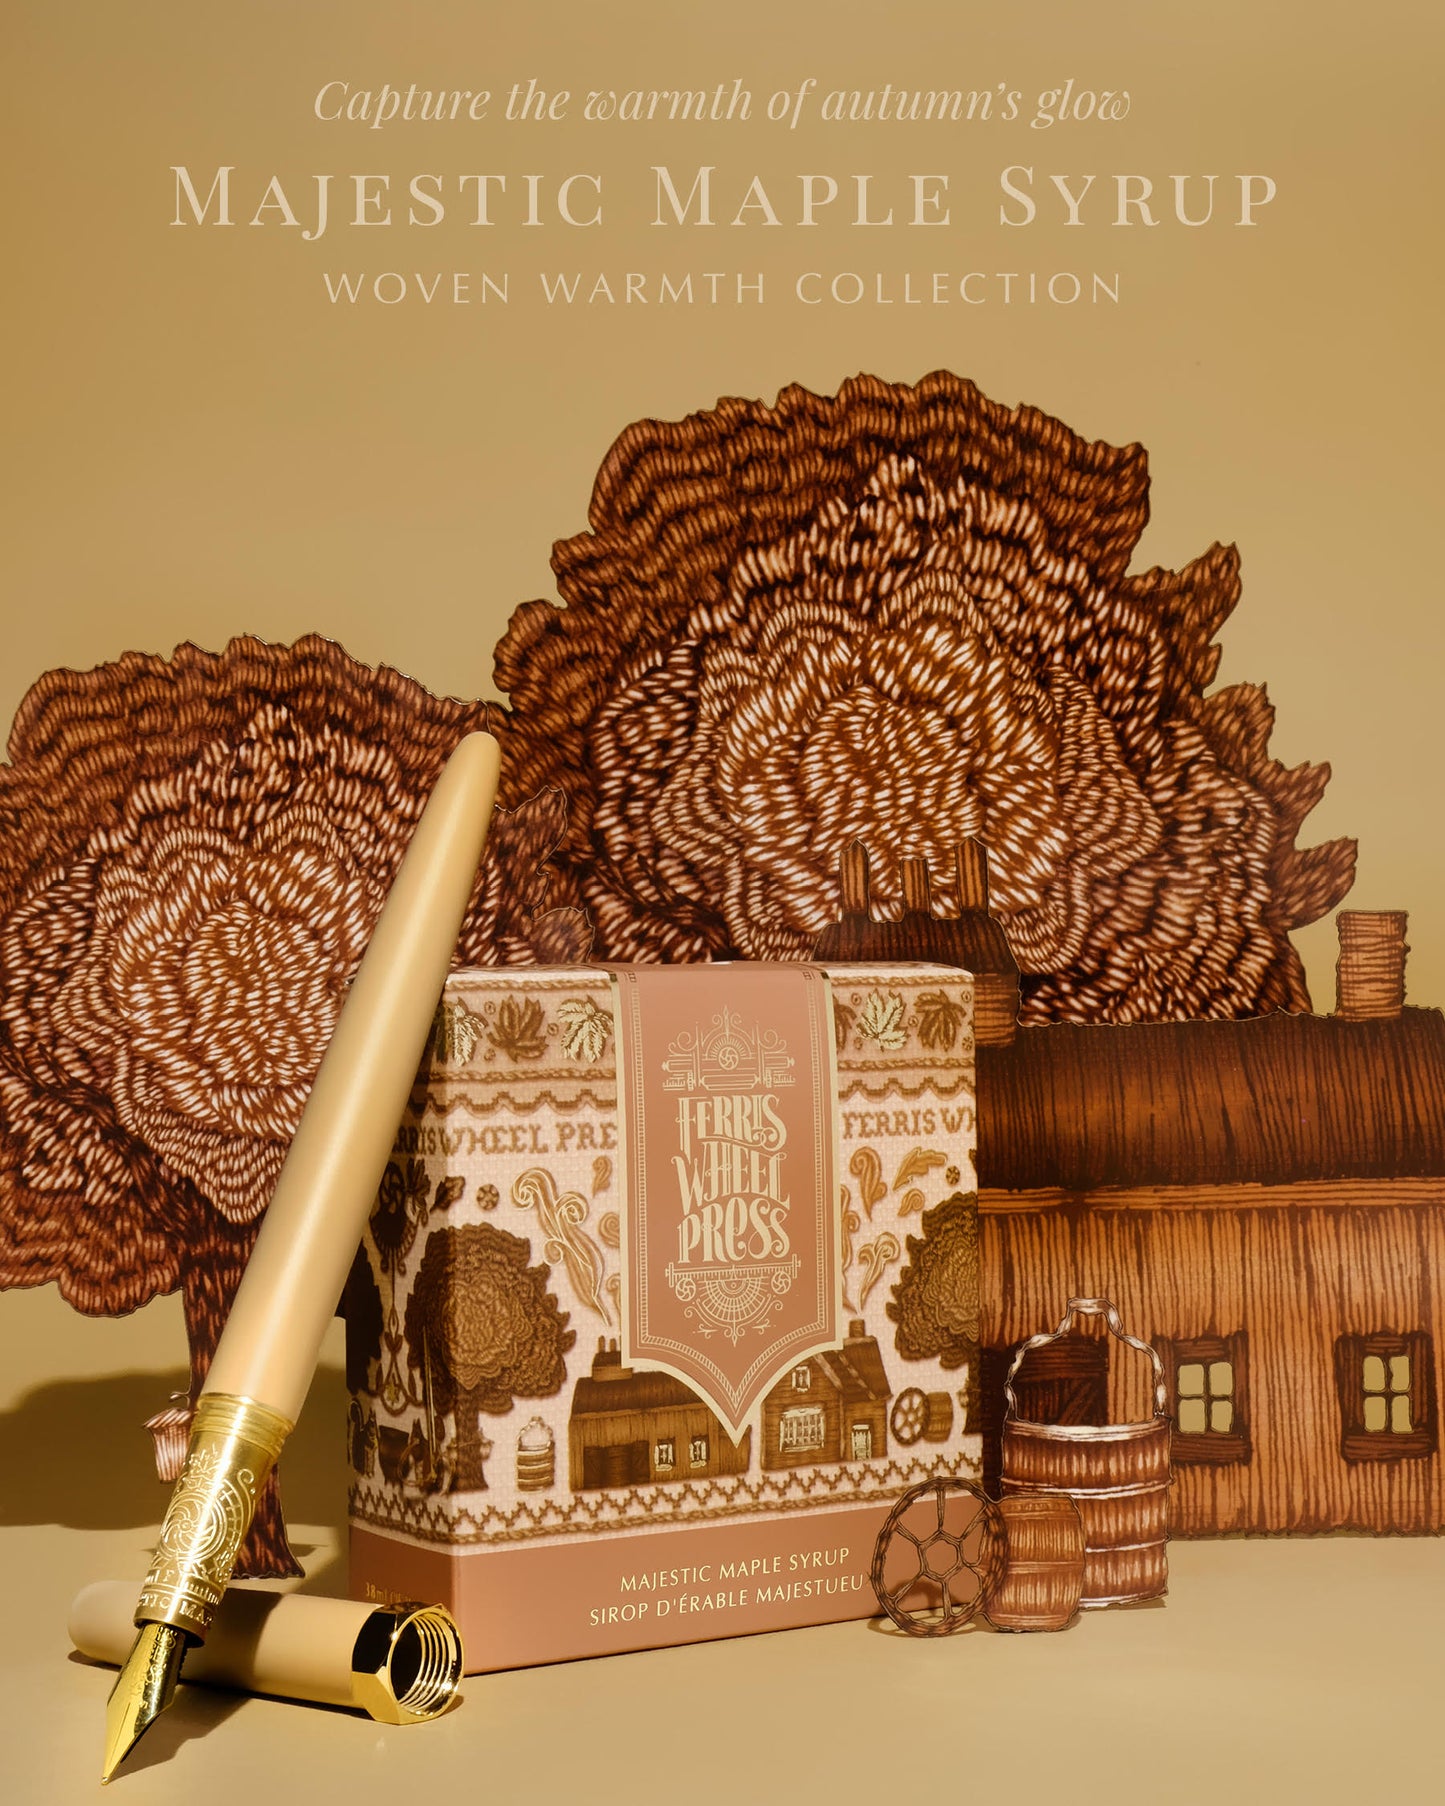 Ferris Wheel Press - Majestic Maple Syrup Ink 38 ml